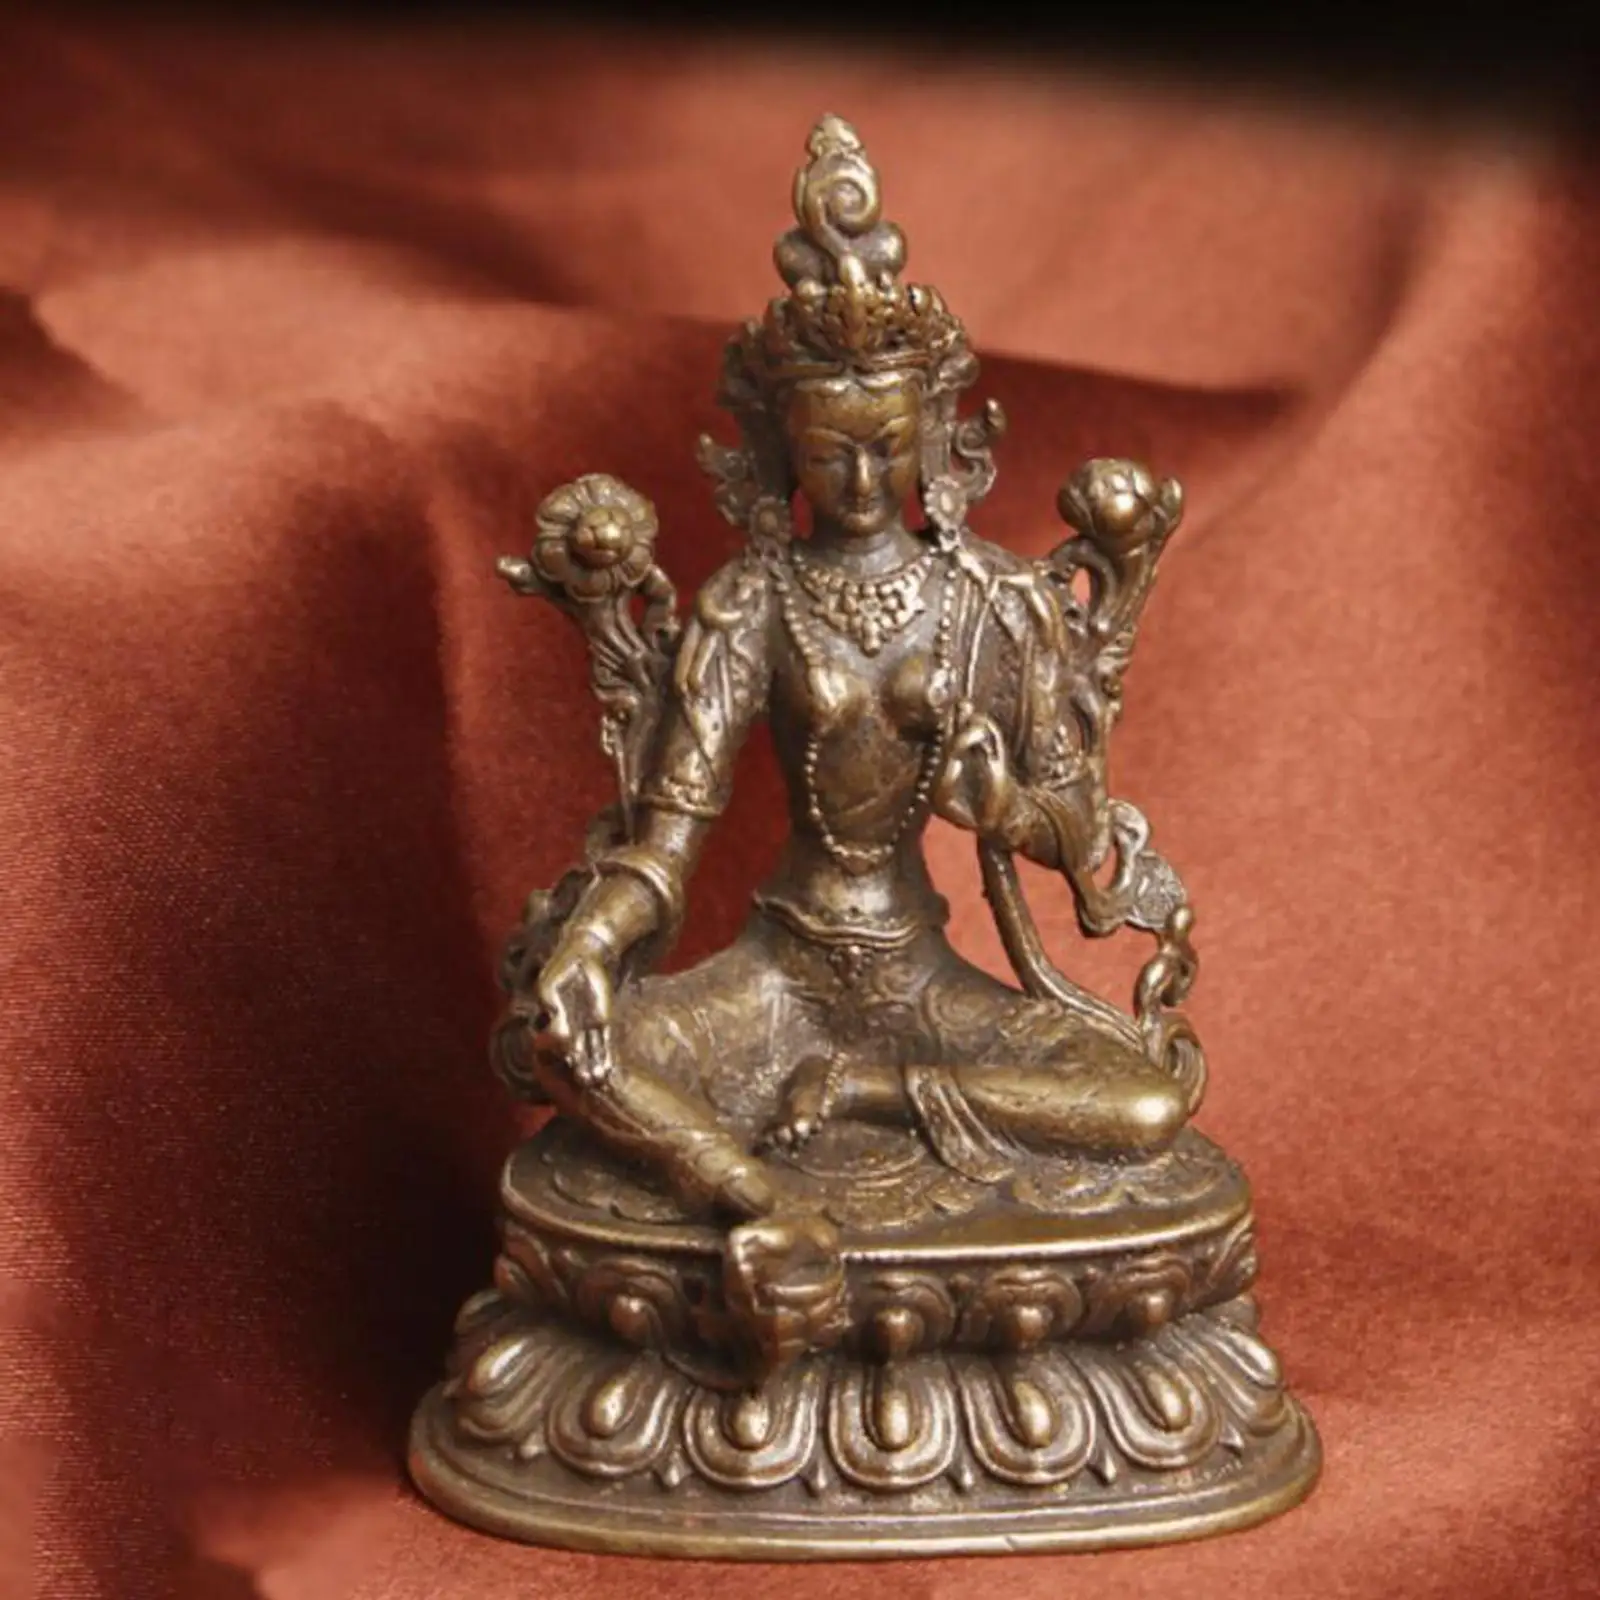 Antique Meditating Buddha Statue Buddhist Figurine Buddhism Sculpture Crafts for Tea House Desktop Cabinet Office Decoration